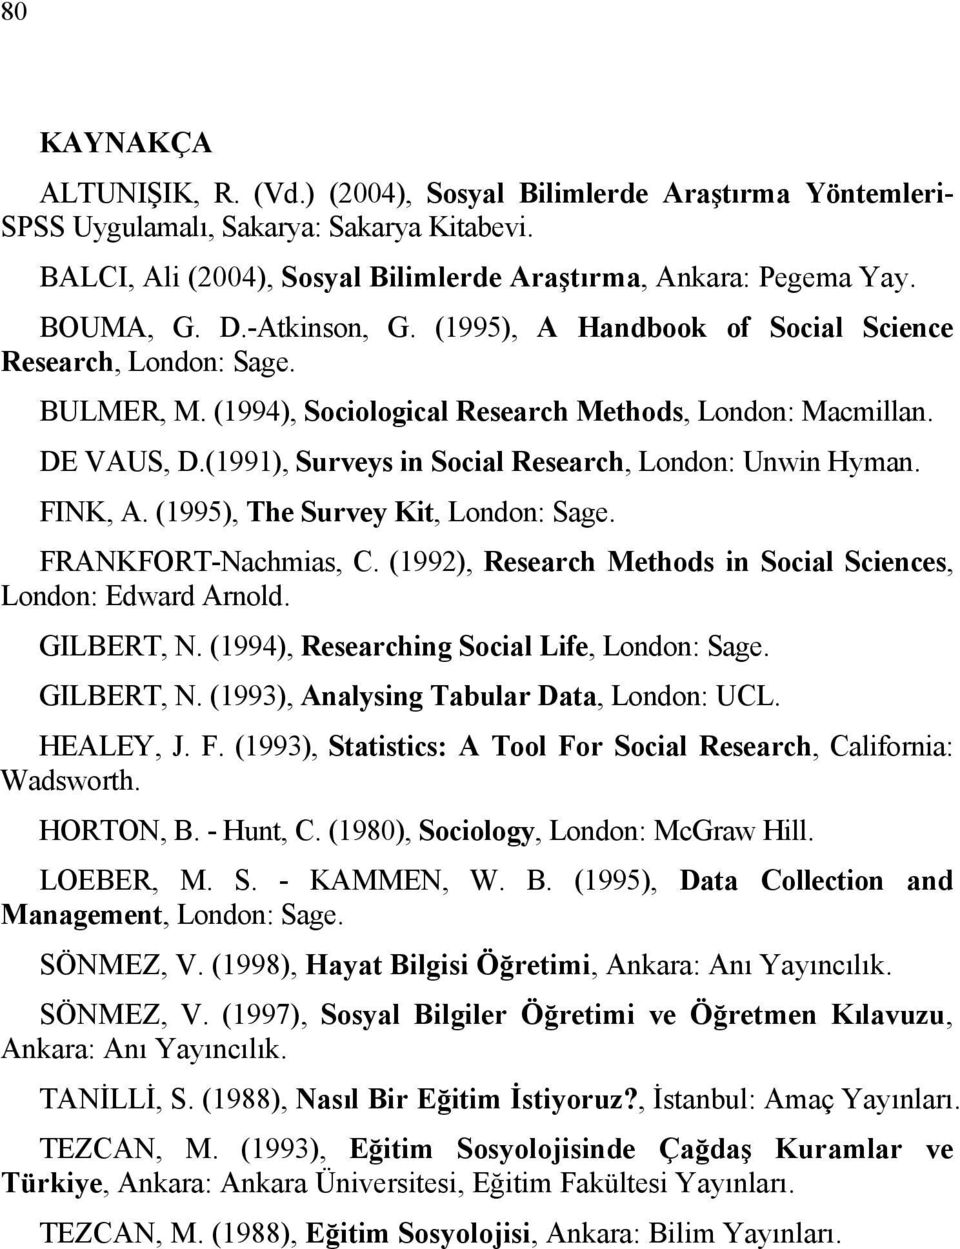 (1991), Surveys in Social Research, London: Unwin Hyman. FINK, A. (1995), The Survey Kit, London: Sage. FRANKFORT-Nachmias, C. (1992), Research Methods in Social Sciences, London: Edward Arnold.